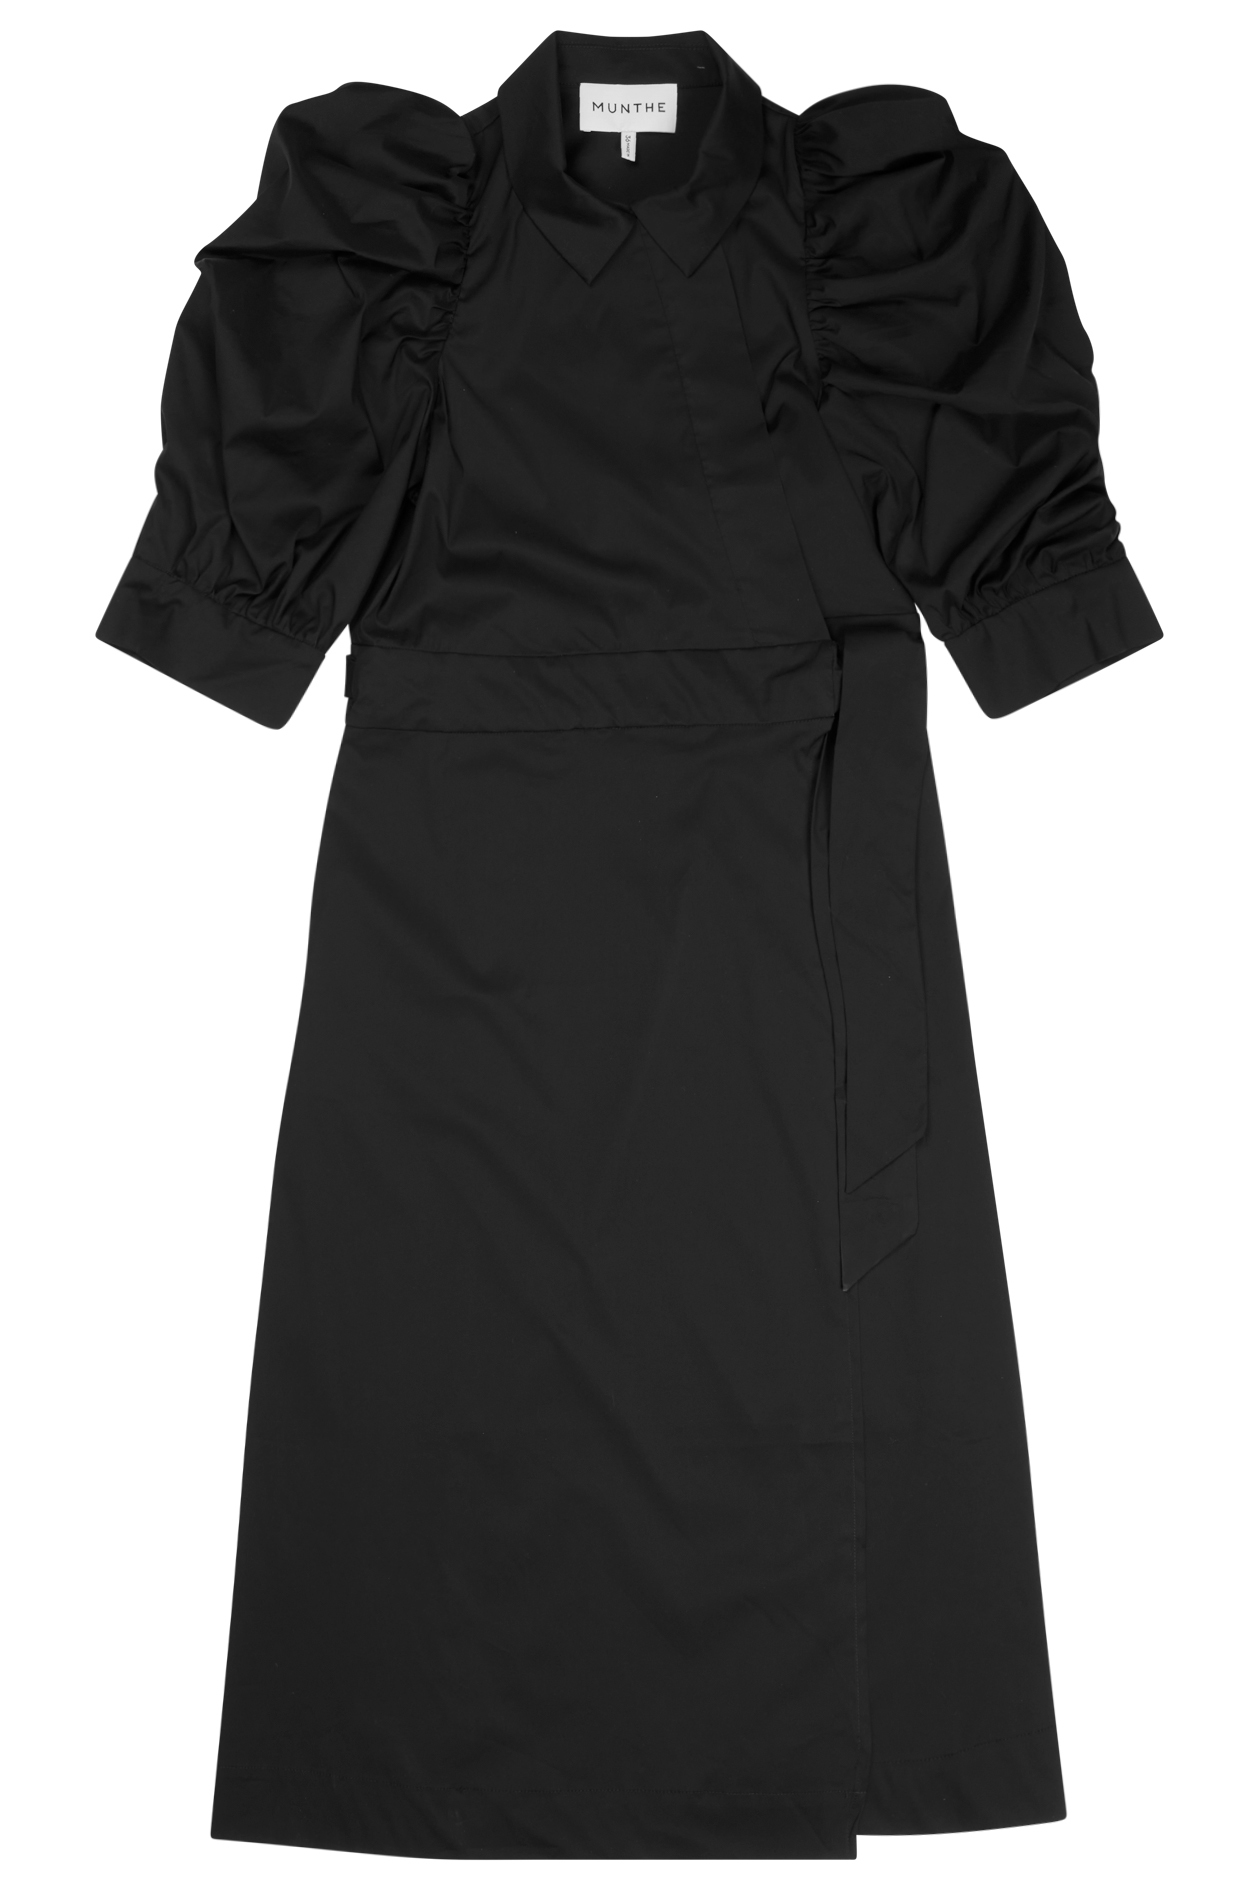 Munthe Aita Organic Cotton Dress - Black